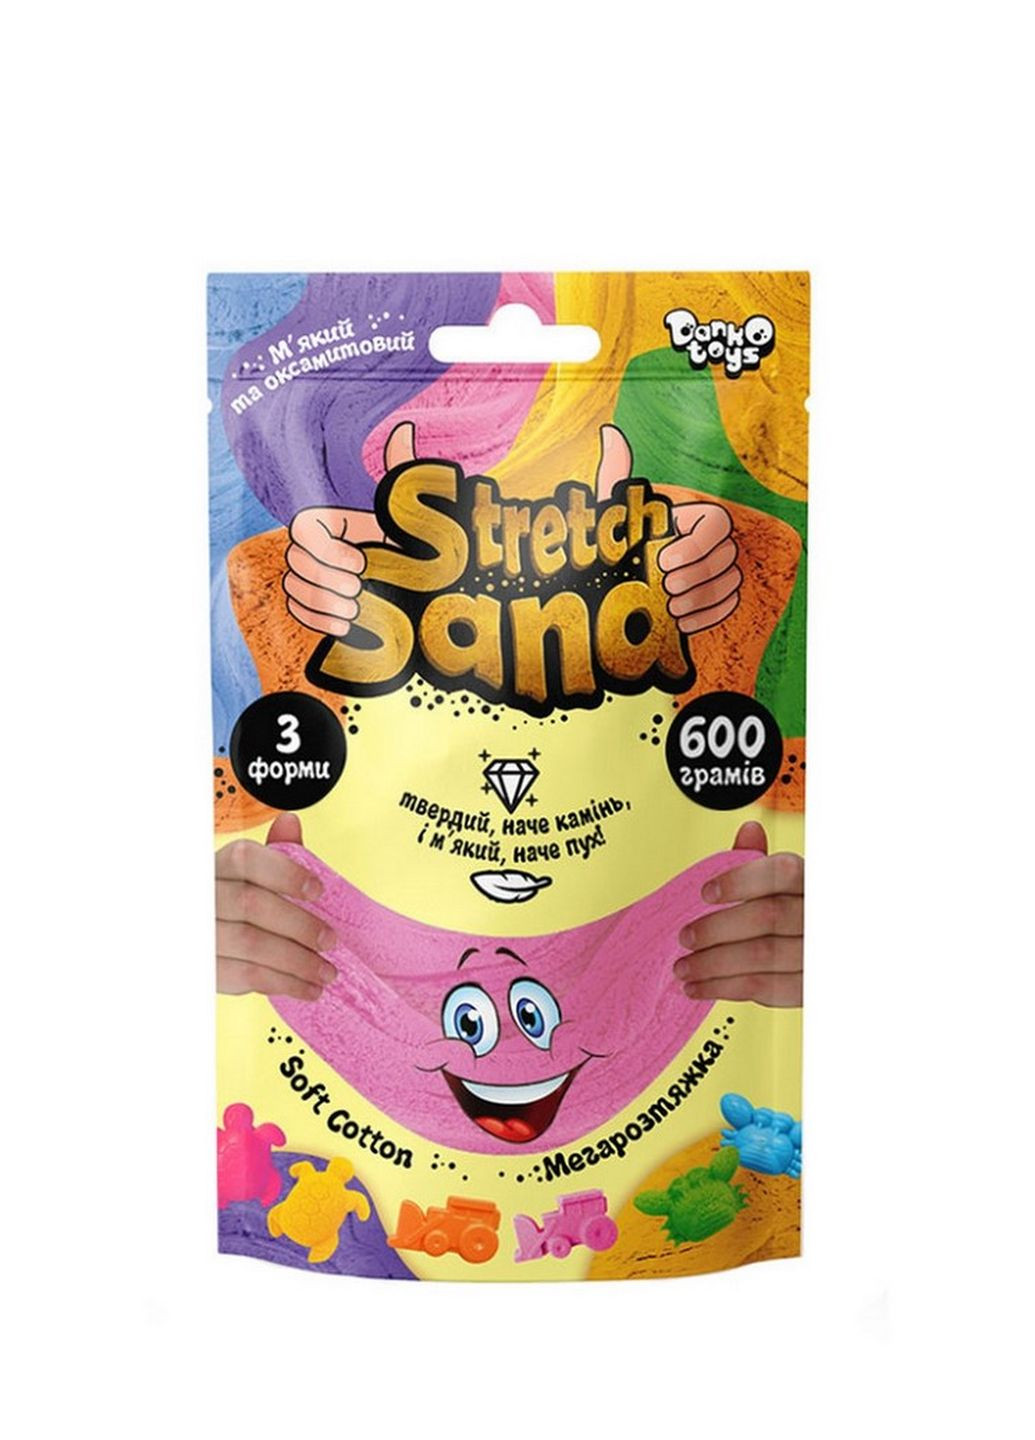 Набор креативного творчества "Stretch Sand" STS-04-01U пакет 600 гр (Розовый) Danko Toys (266631721)